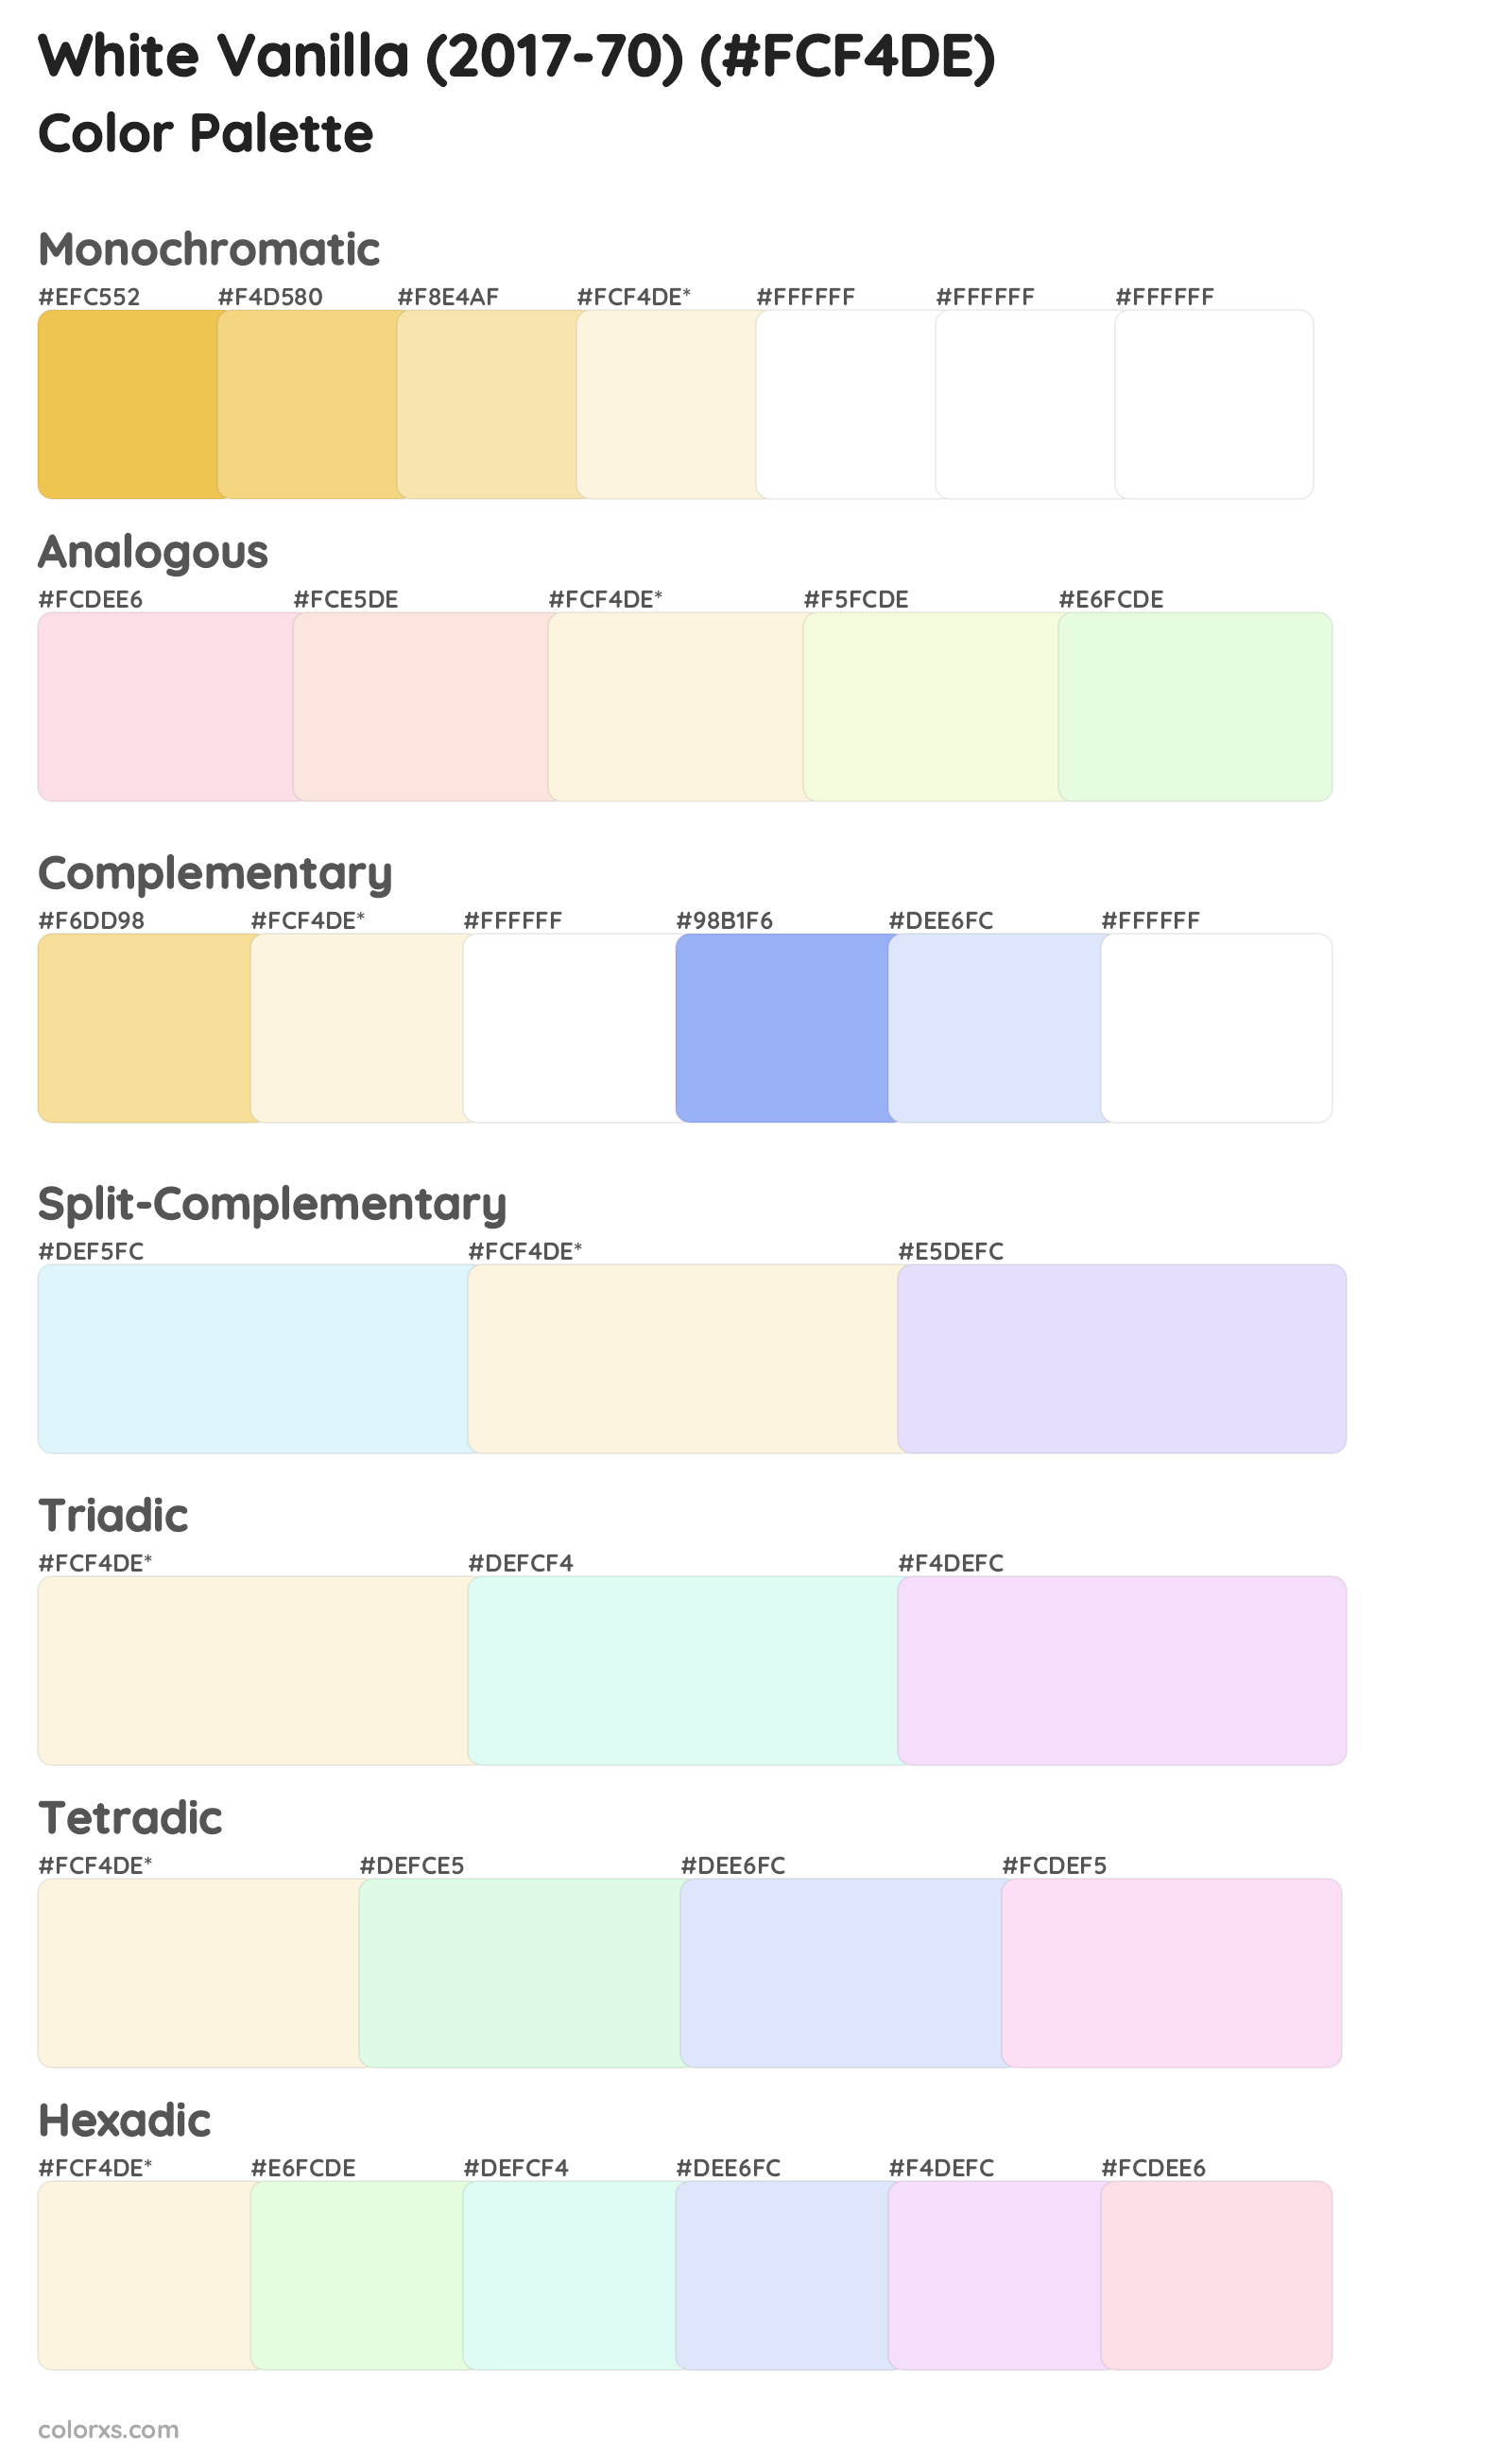 White Vanilla (2017-70) Color Scheme Palettes